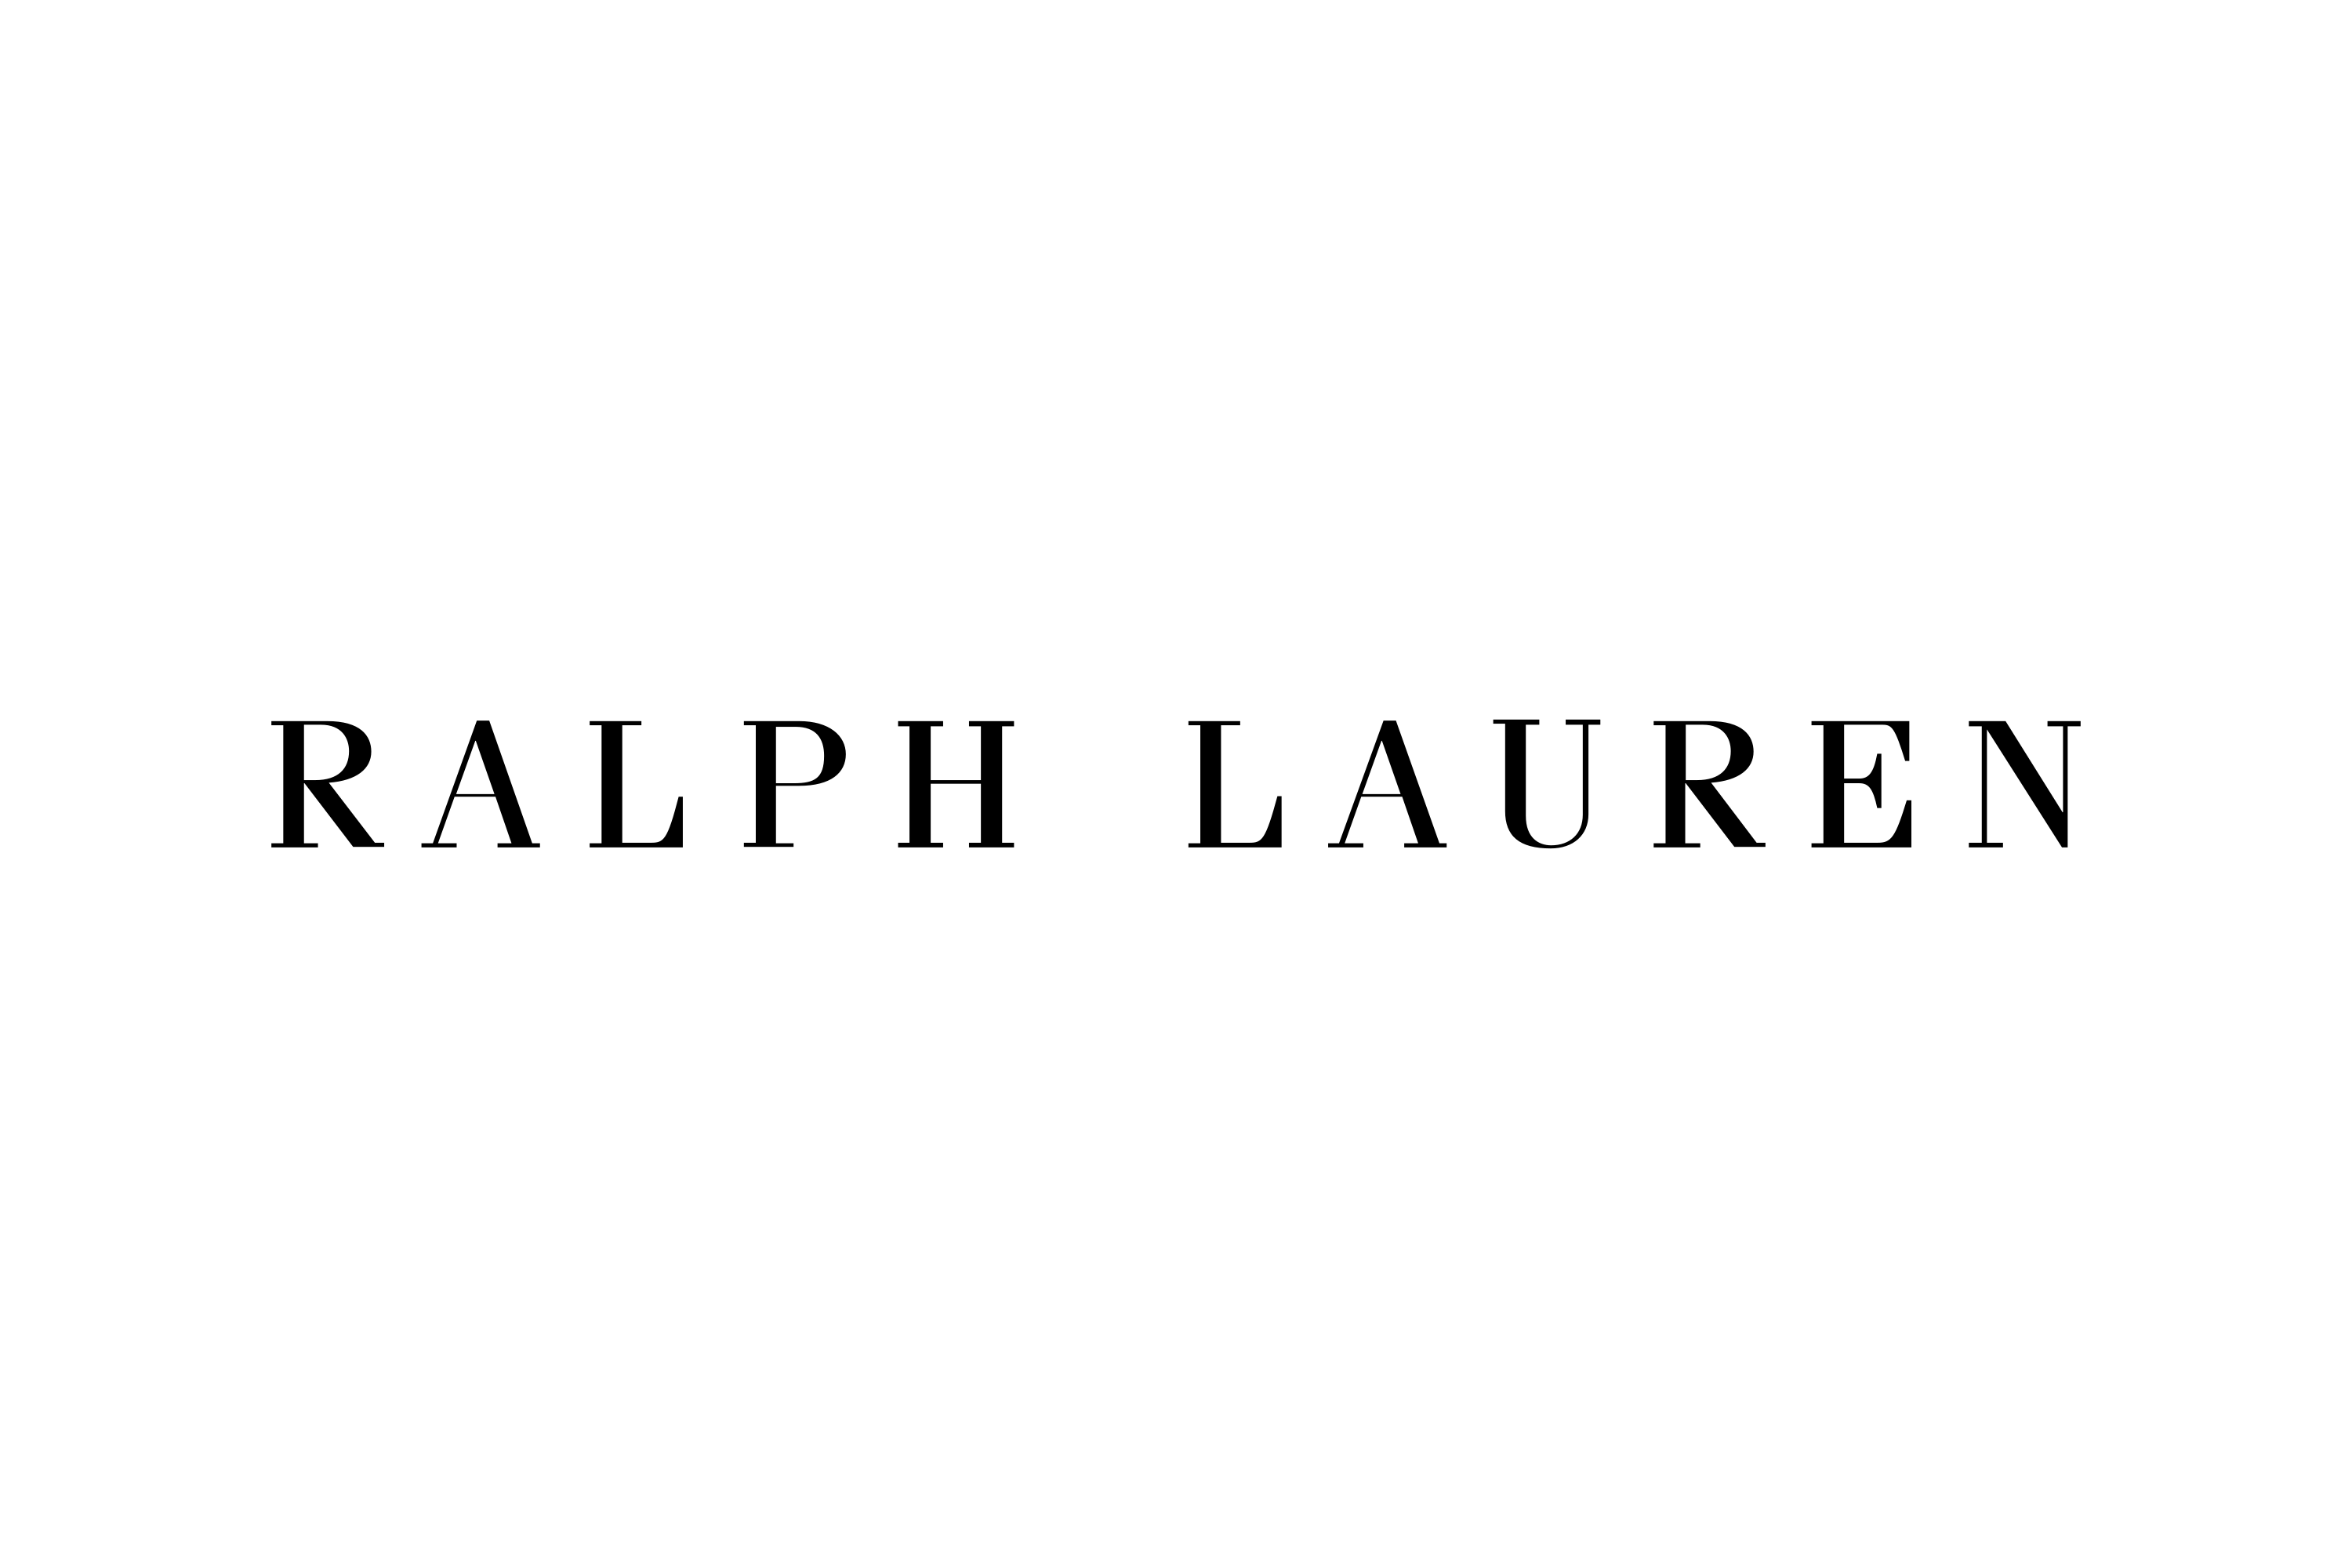 Ralph Lauren Corporation Logo